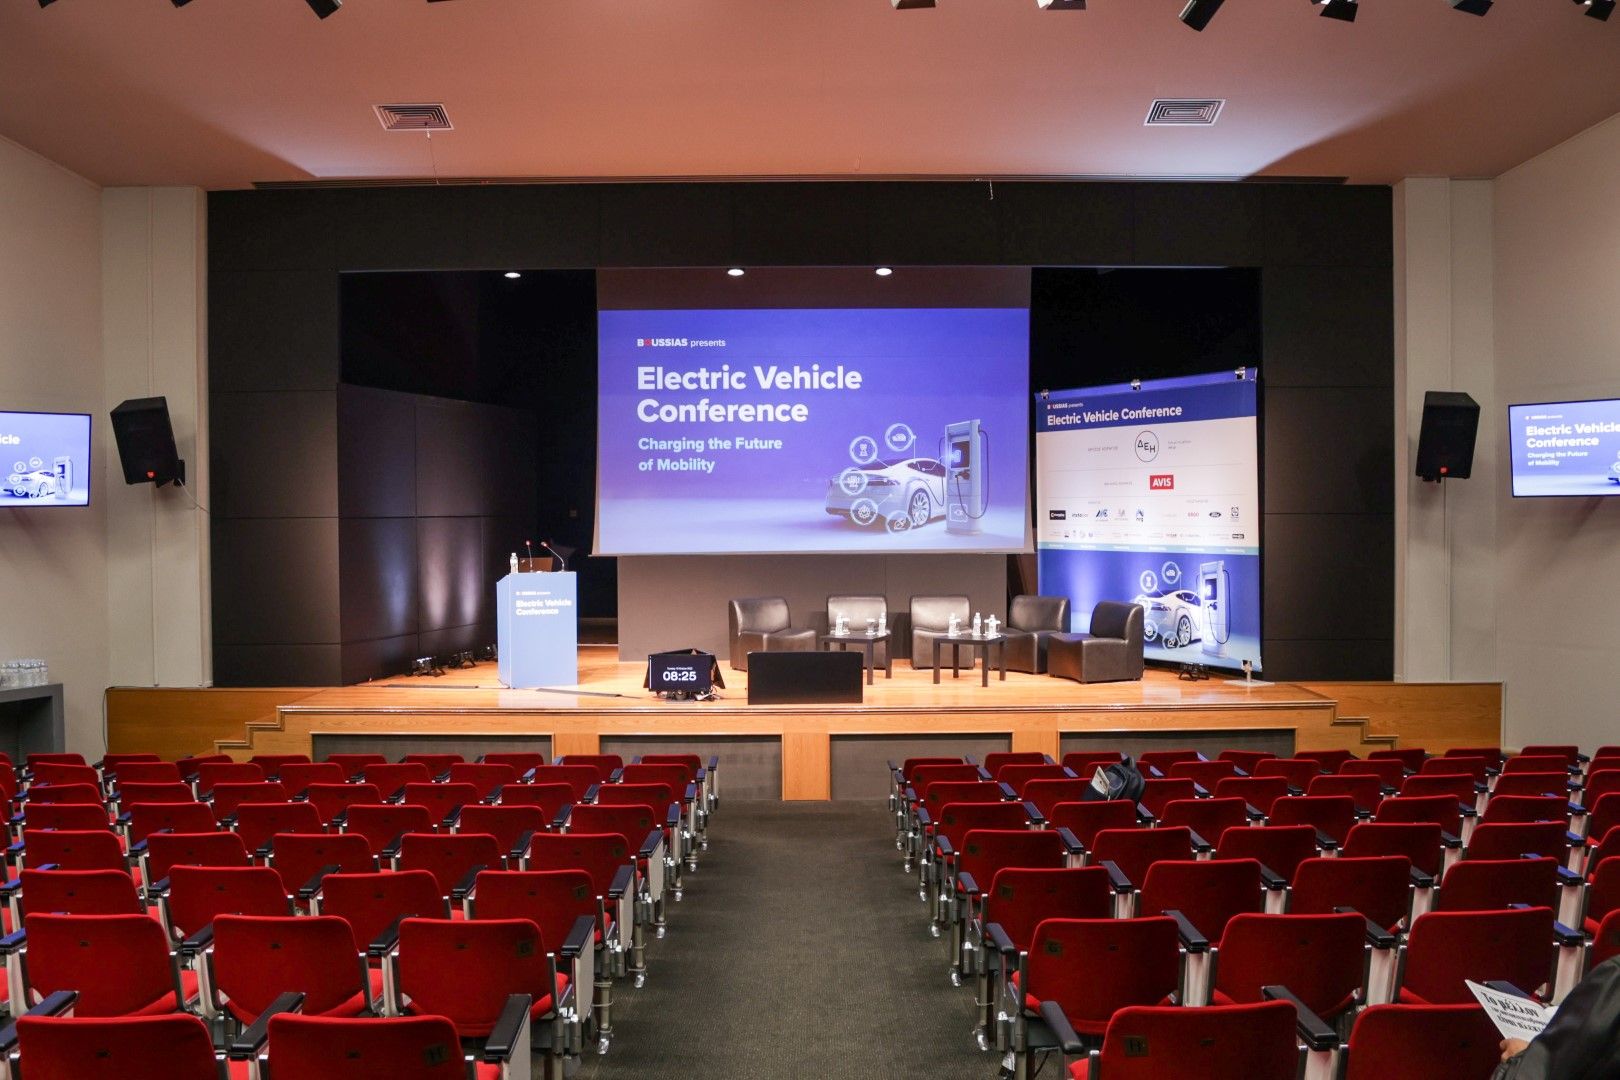 Electric Vehicle Conference 2022: Το CarsElectric.gr οδηγεί τις εξελίξεις στην ηλεκτροκίνηση